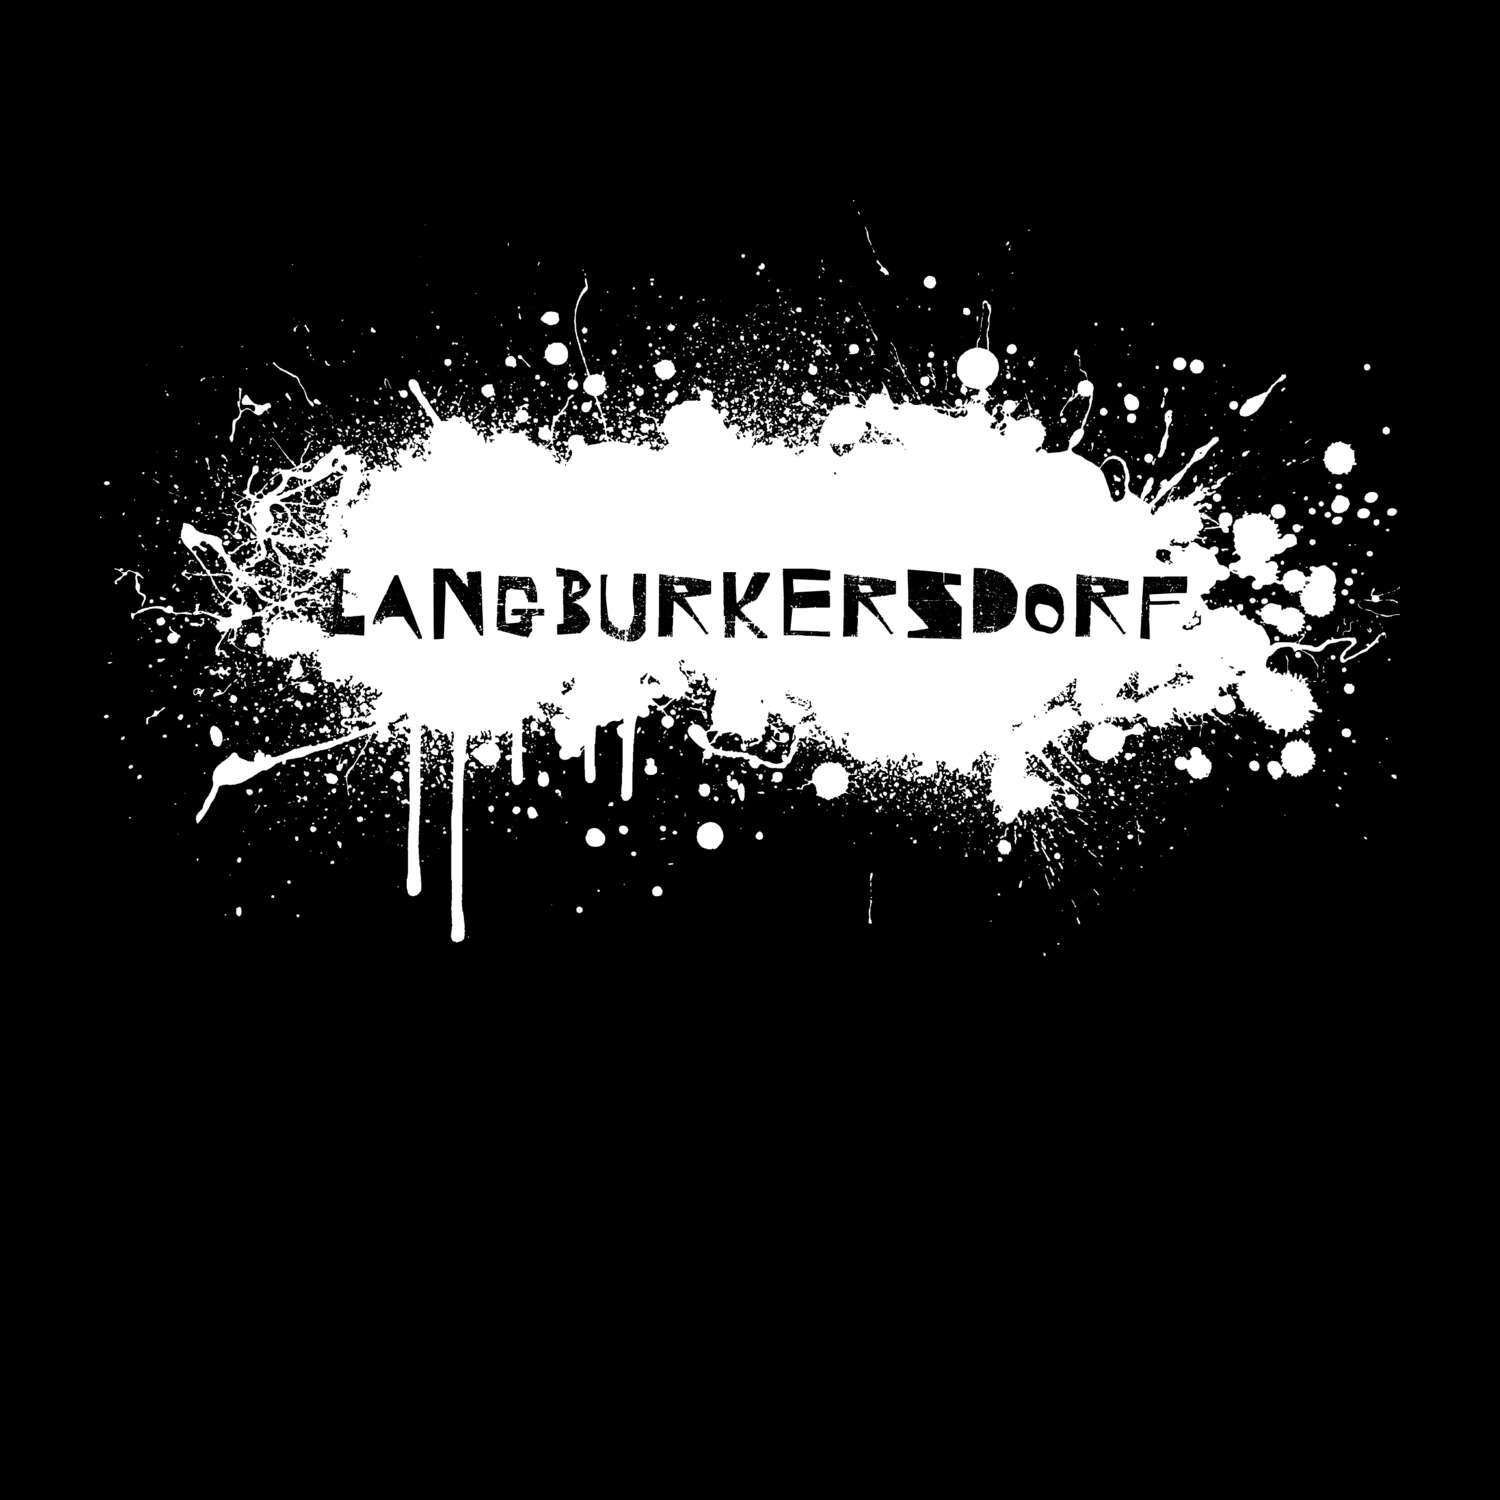 Langburkersdorf T-Shirt »Paint Splash Punk«